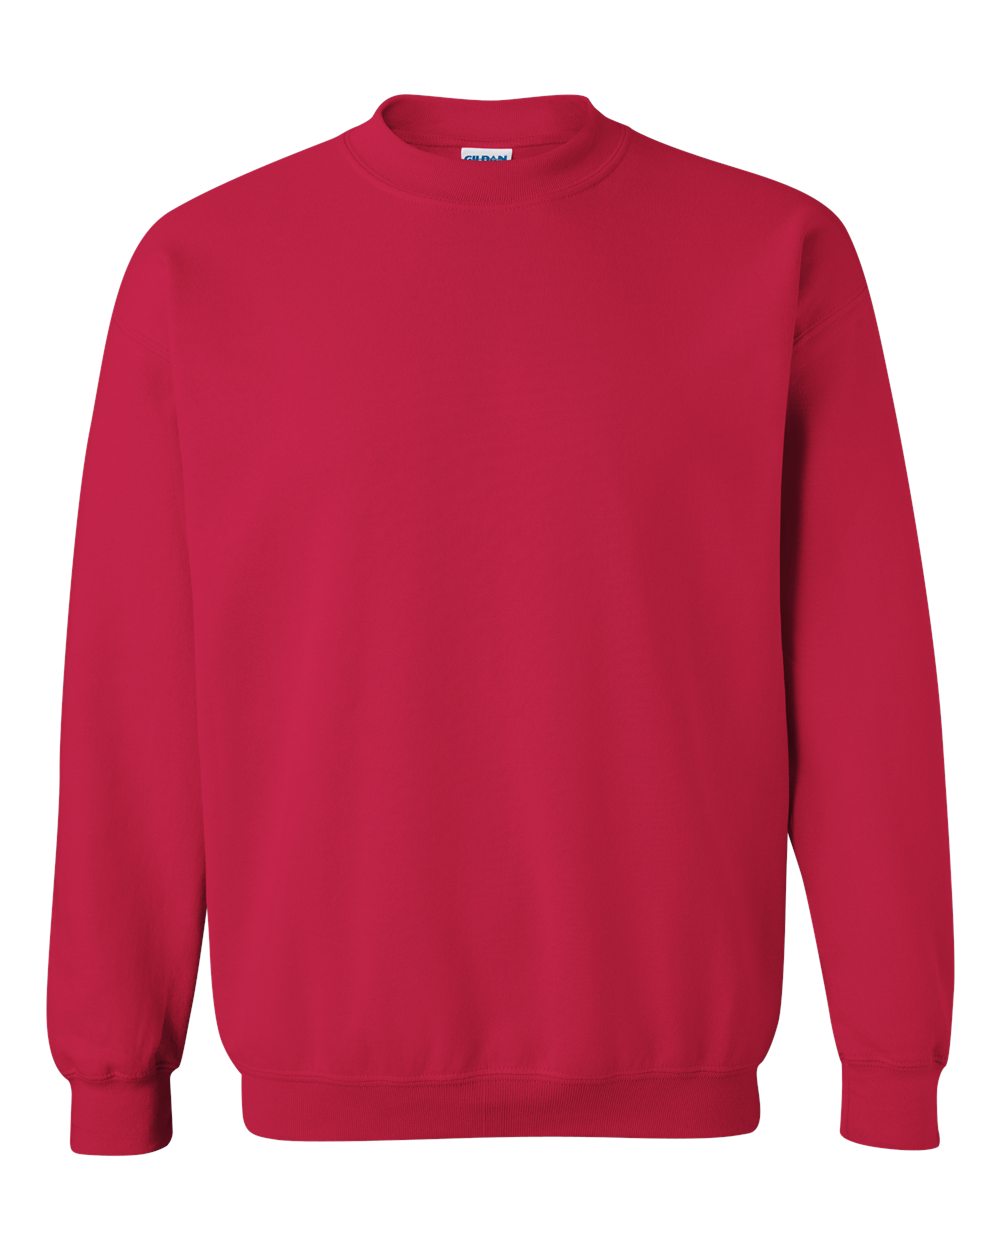 Gildan 18000 - Heavy Blend Fleece Crewneck Sweatshirt